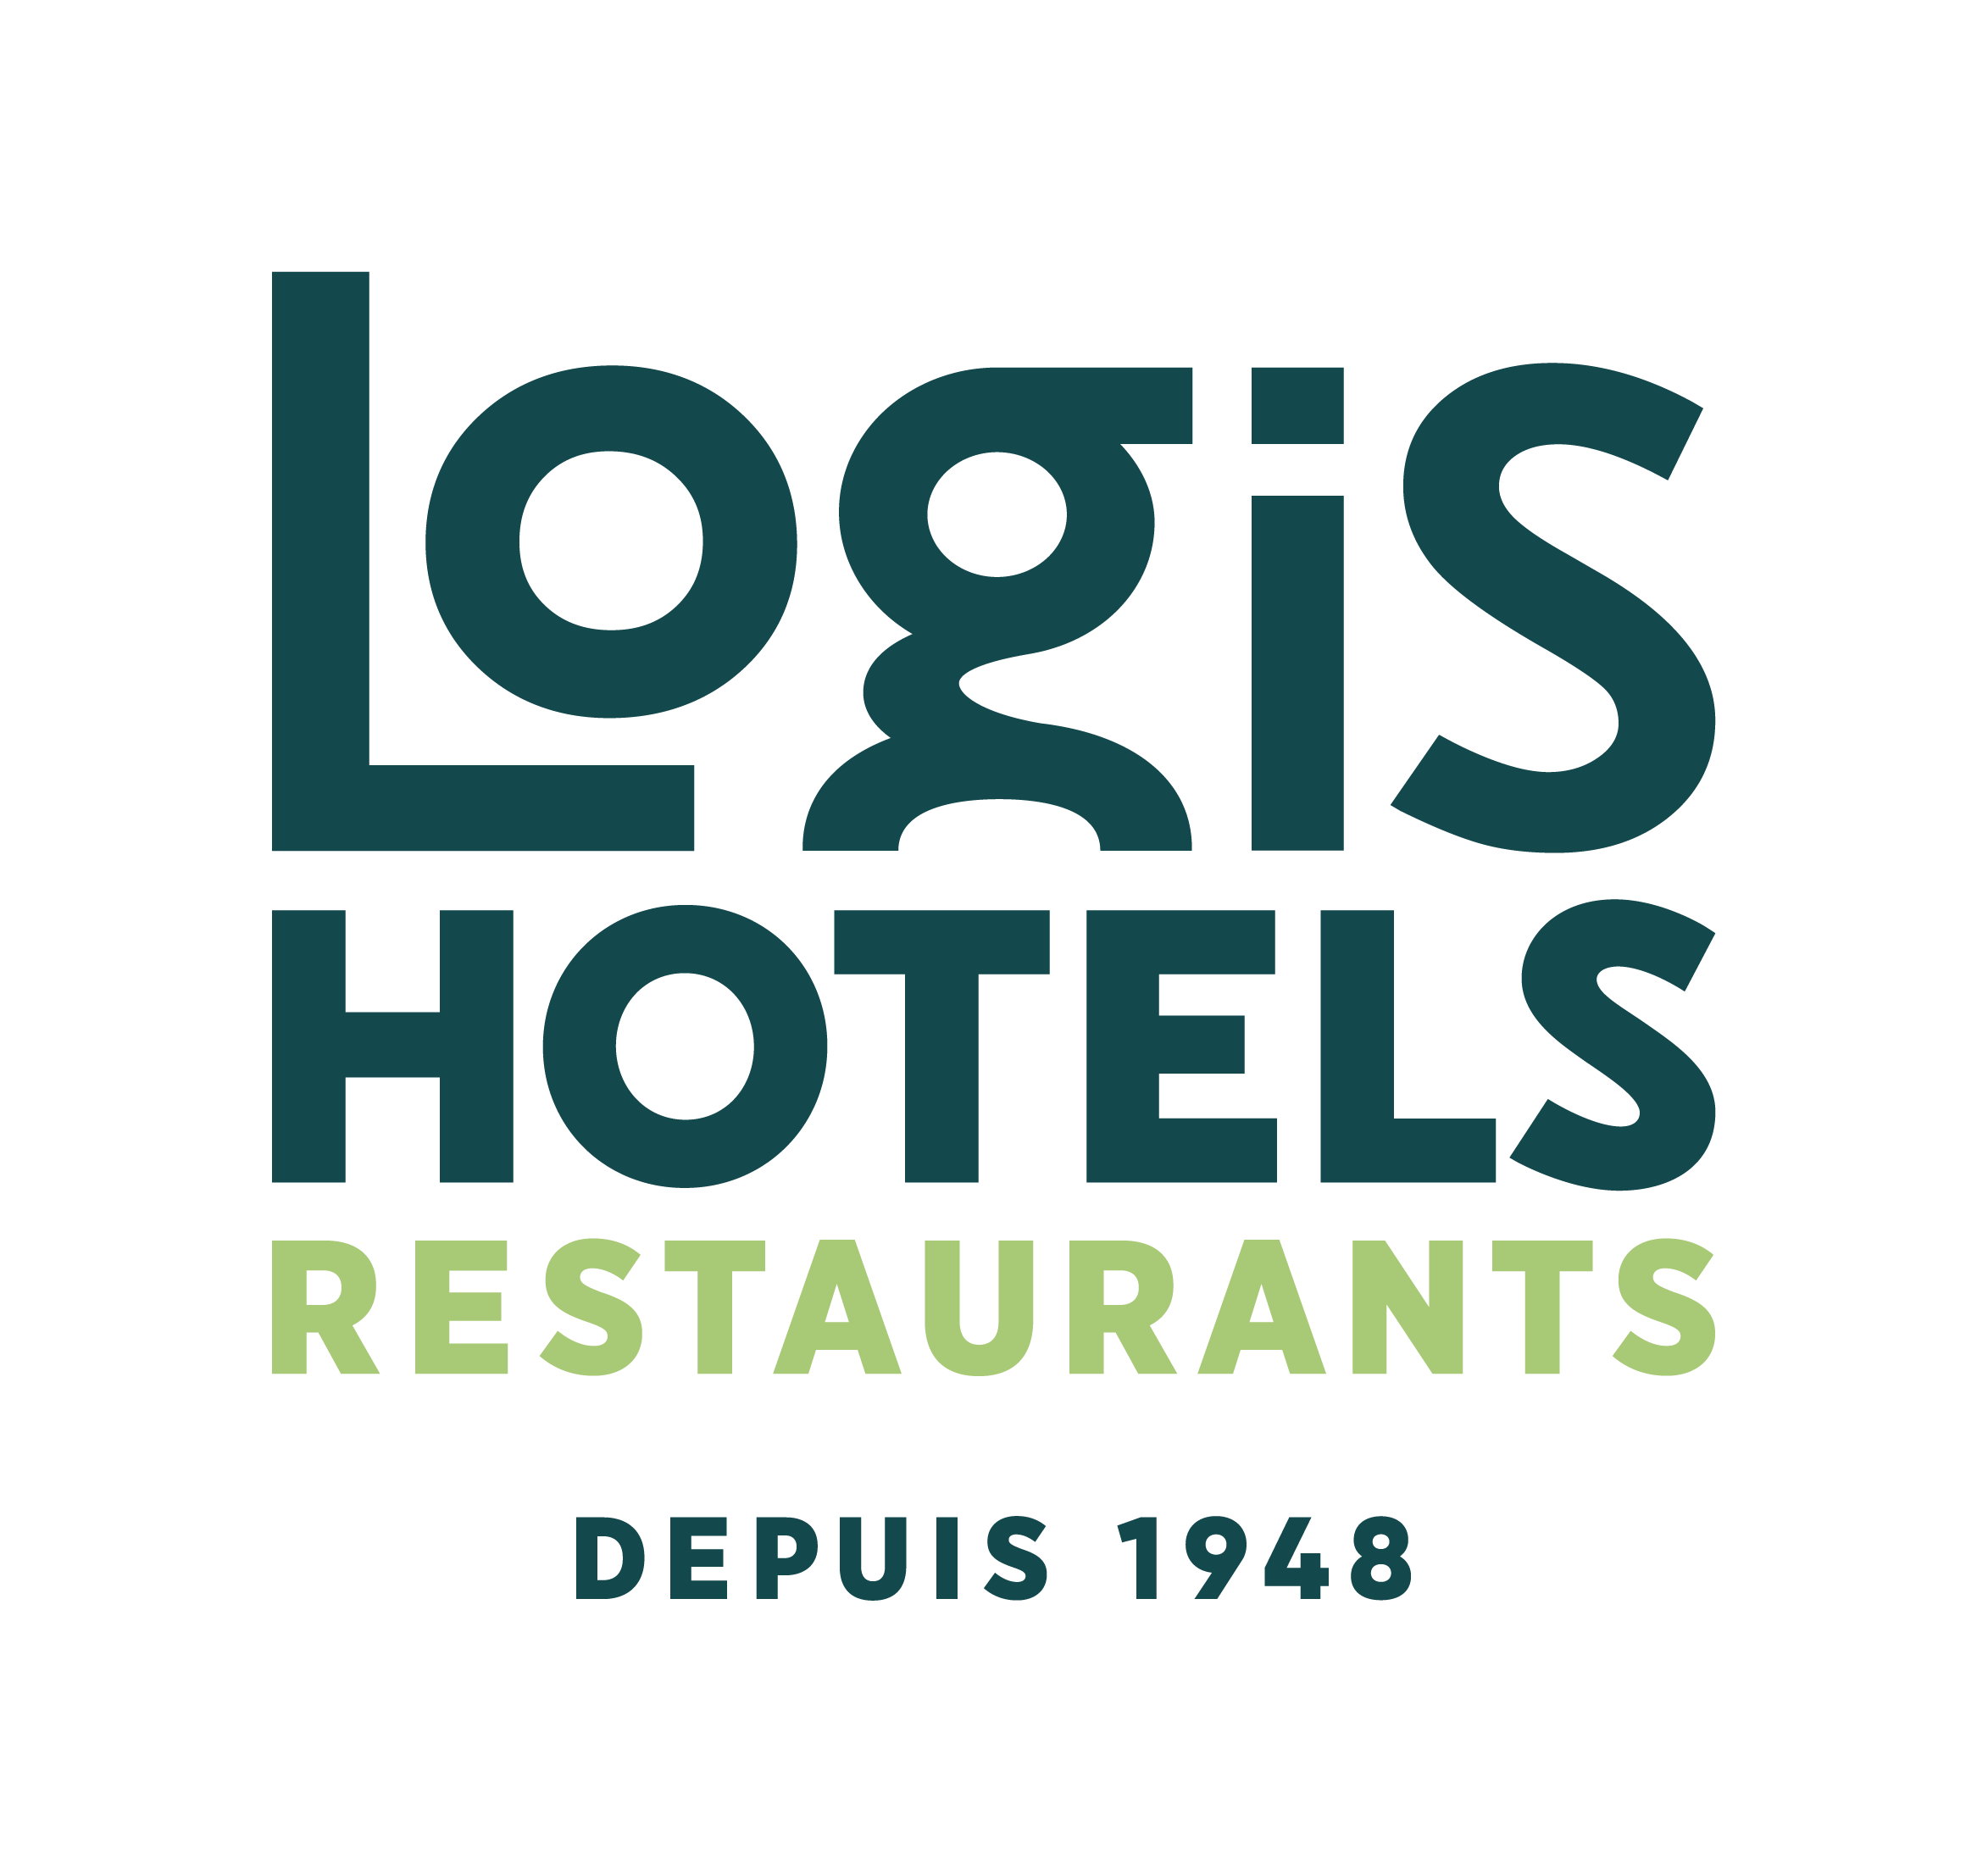 Logis Hotels Restaurant depuis 1948